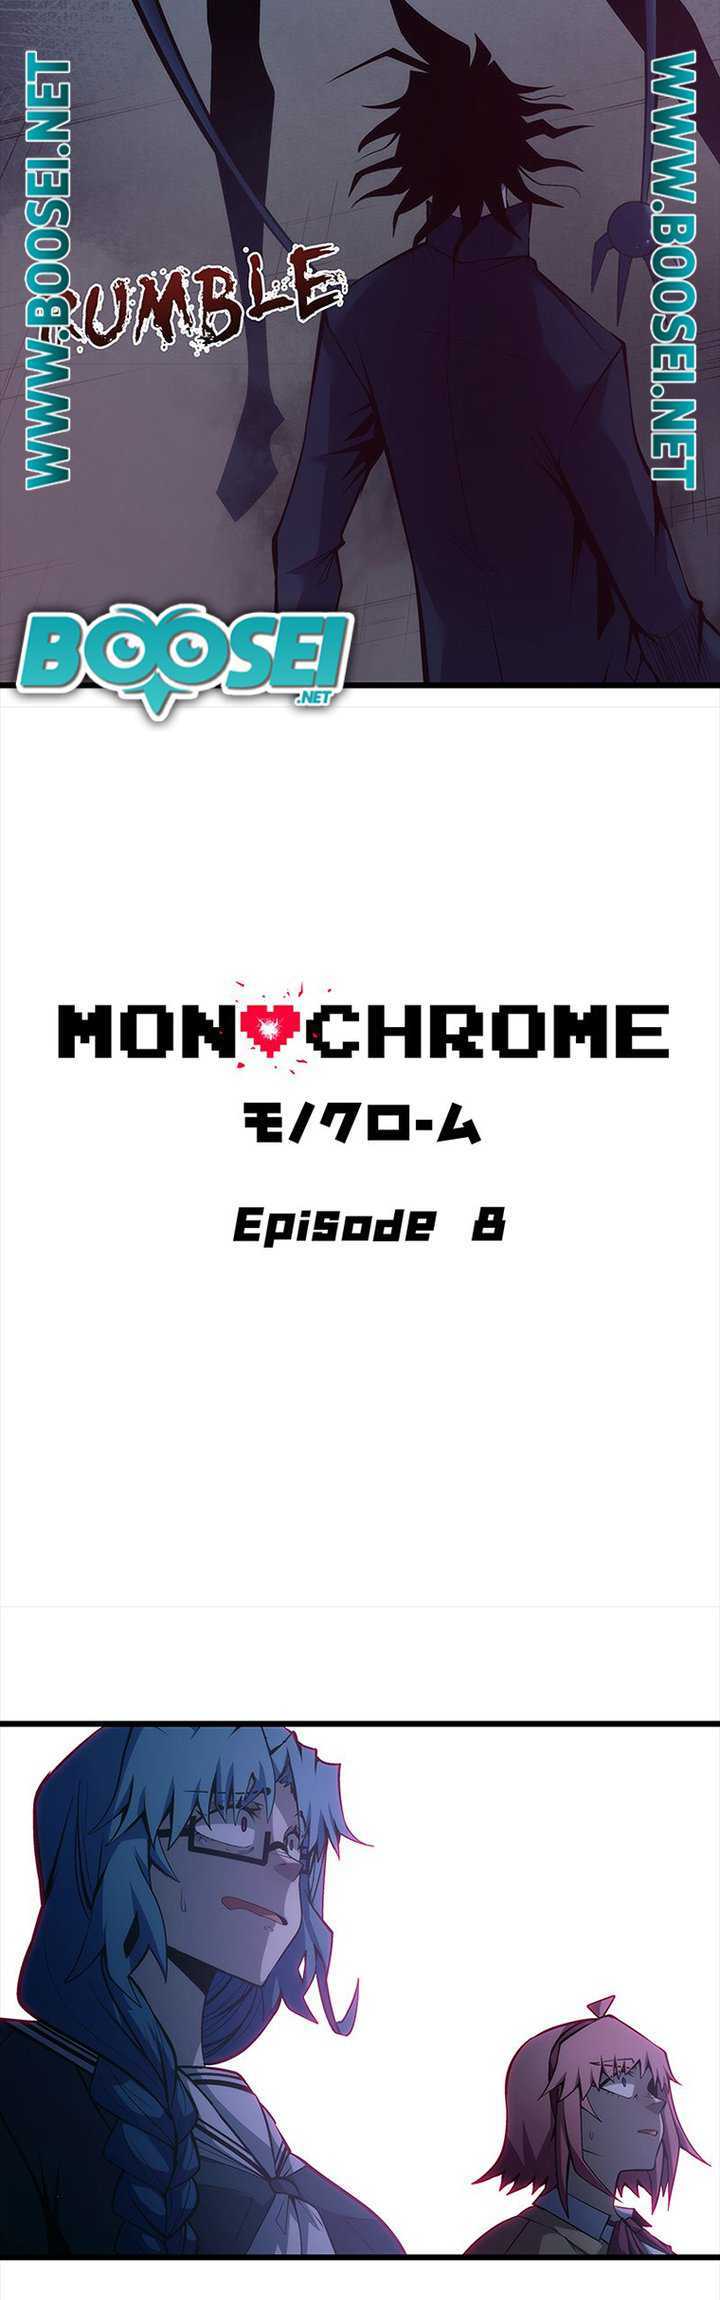 Monochrome Chapter 8